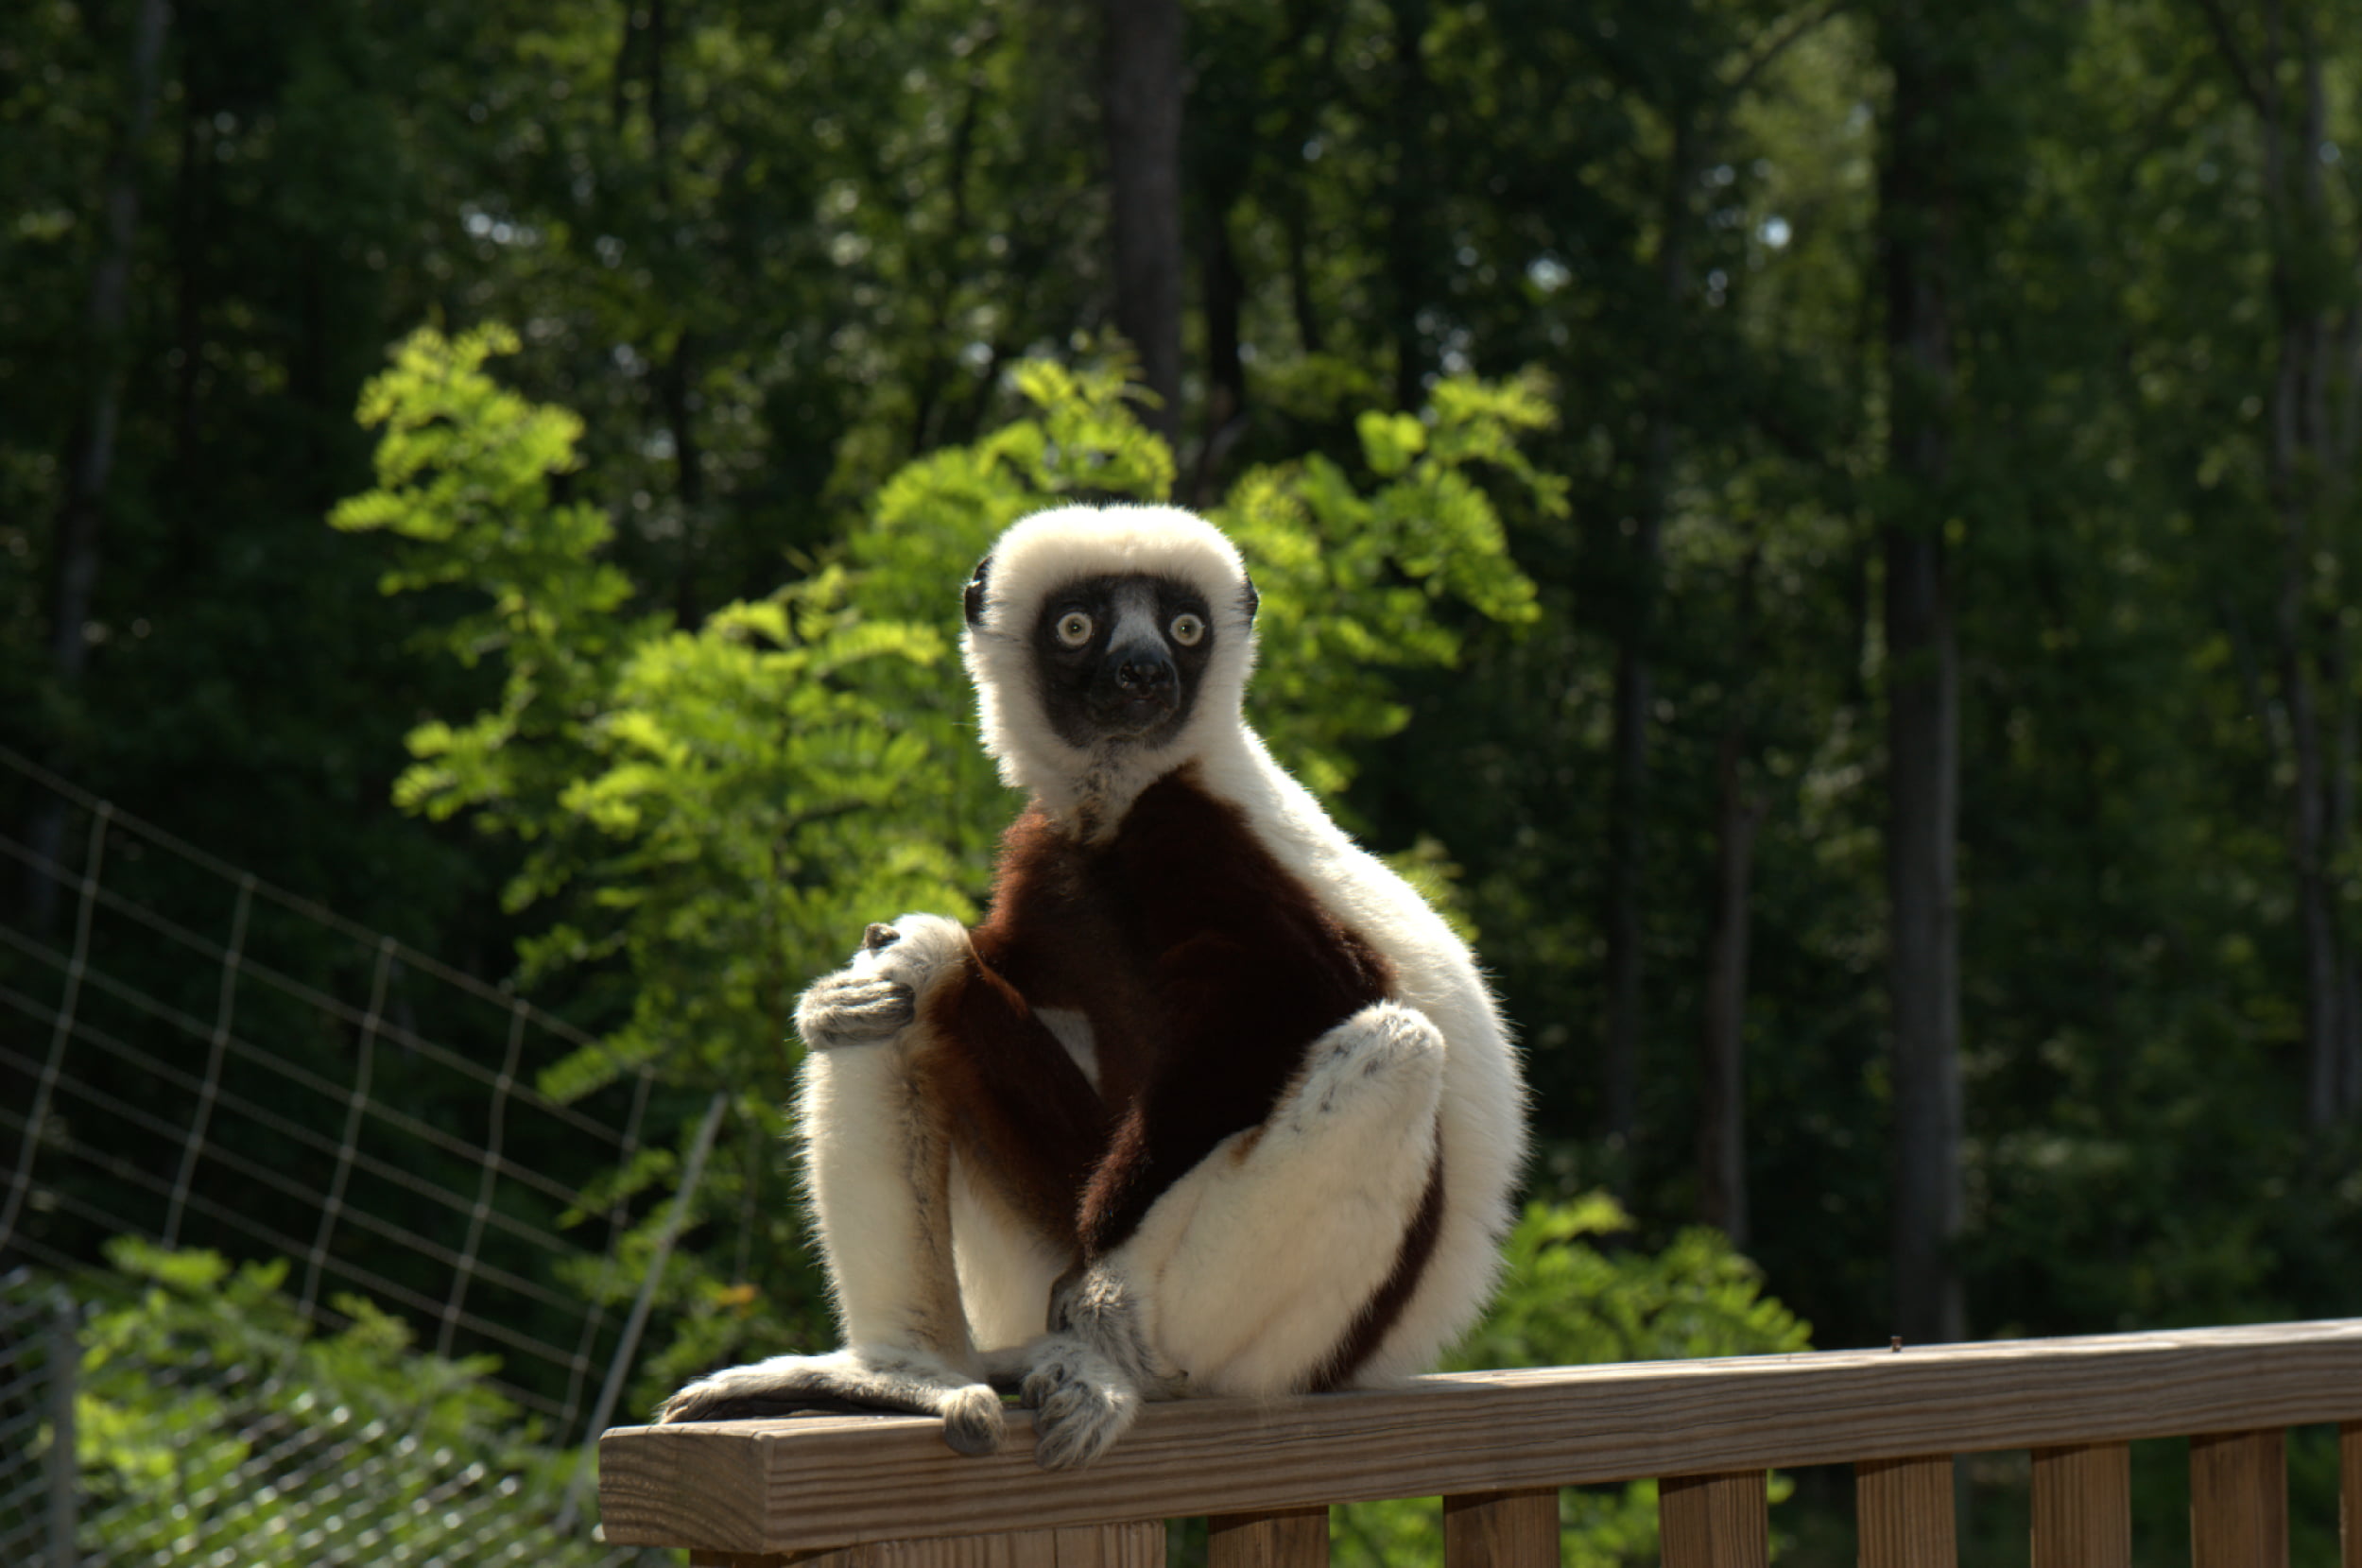 white and black lemur, zoboomafoo, 2014, animal, wildlife, primate